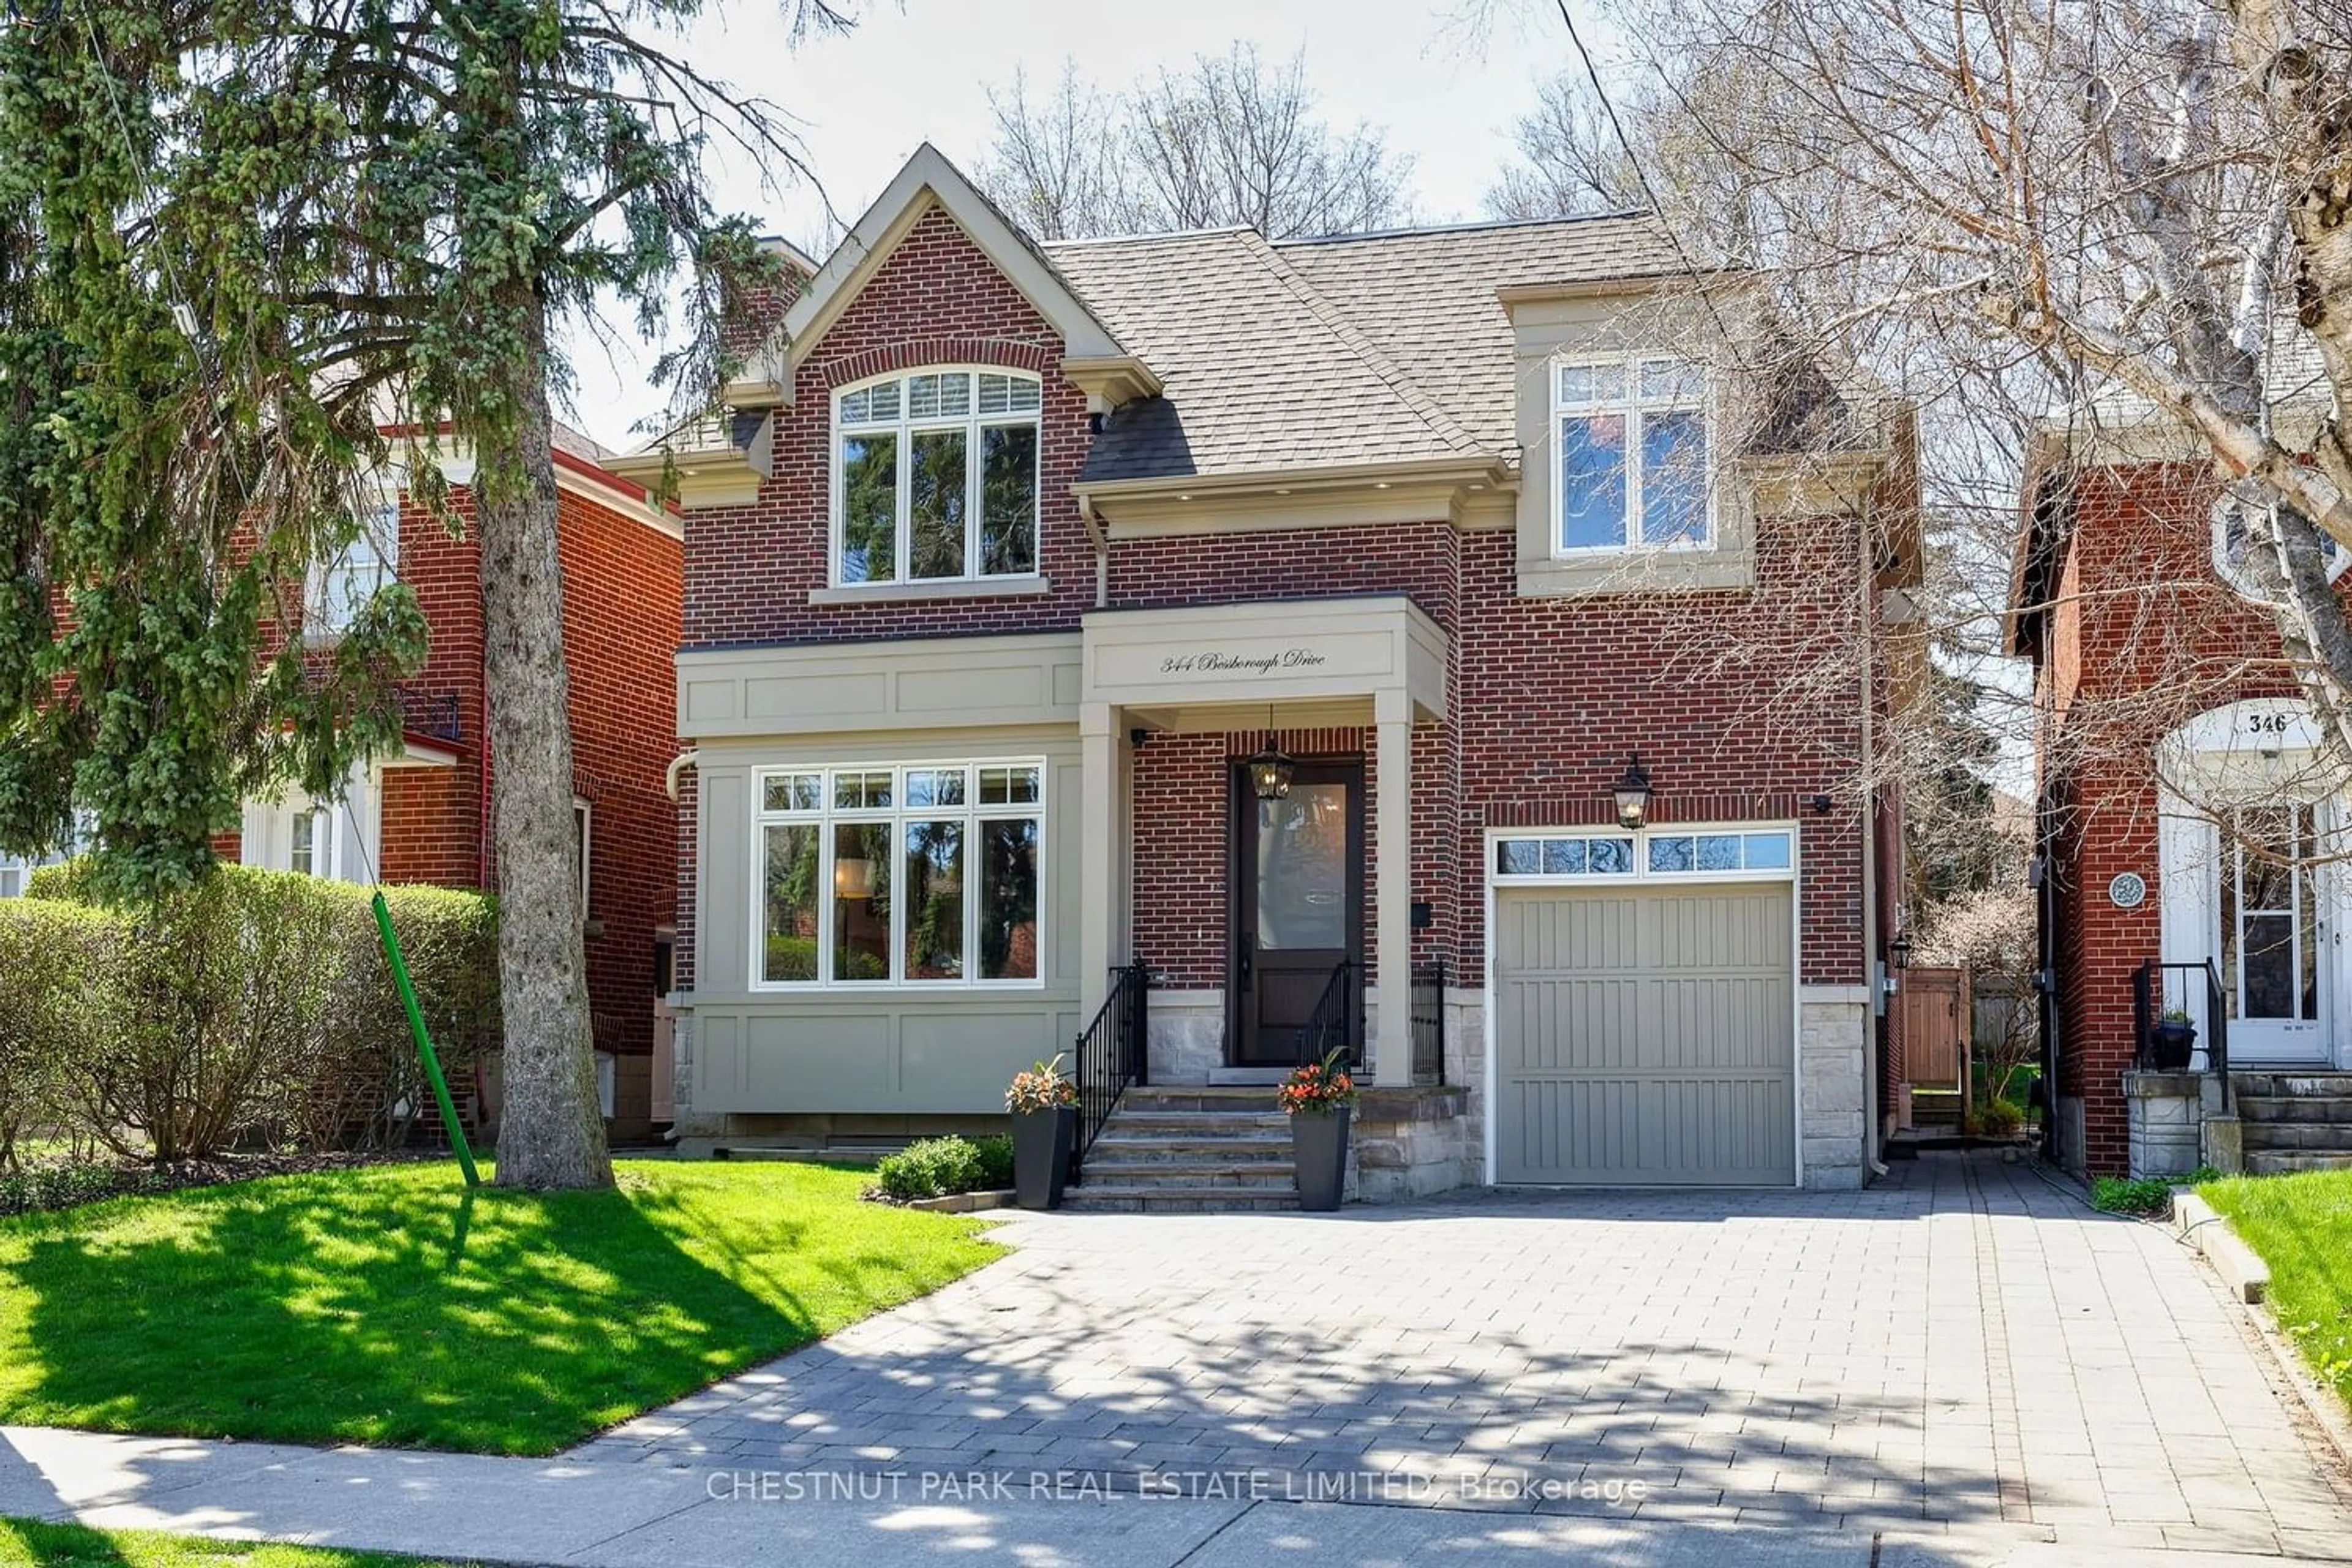 Home with brick exterior material for 344 Bessborough Dr, Toronto Ontario M4G 3L2